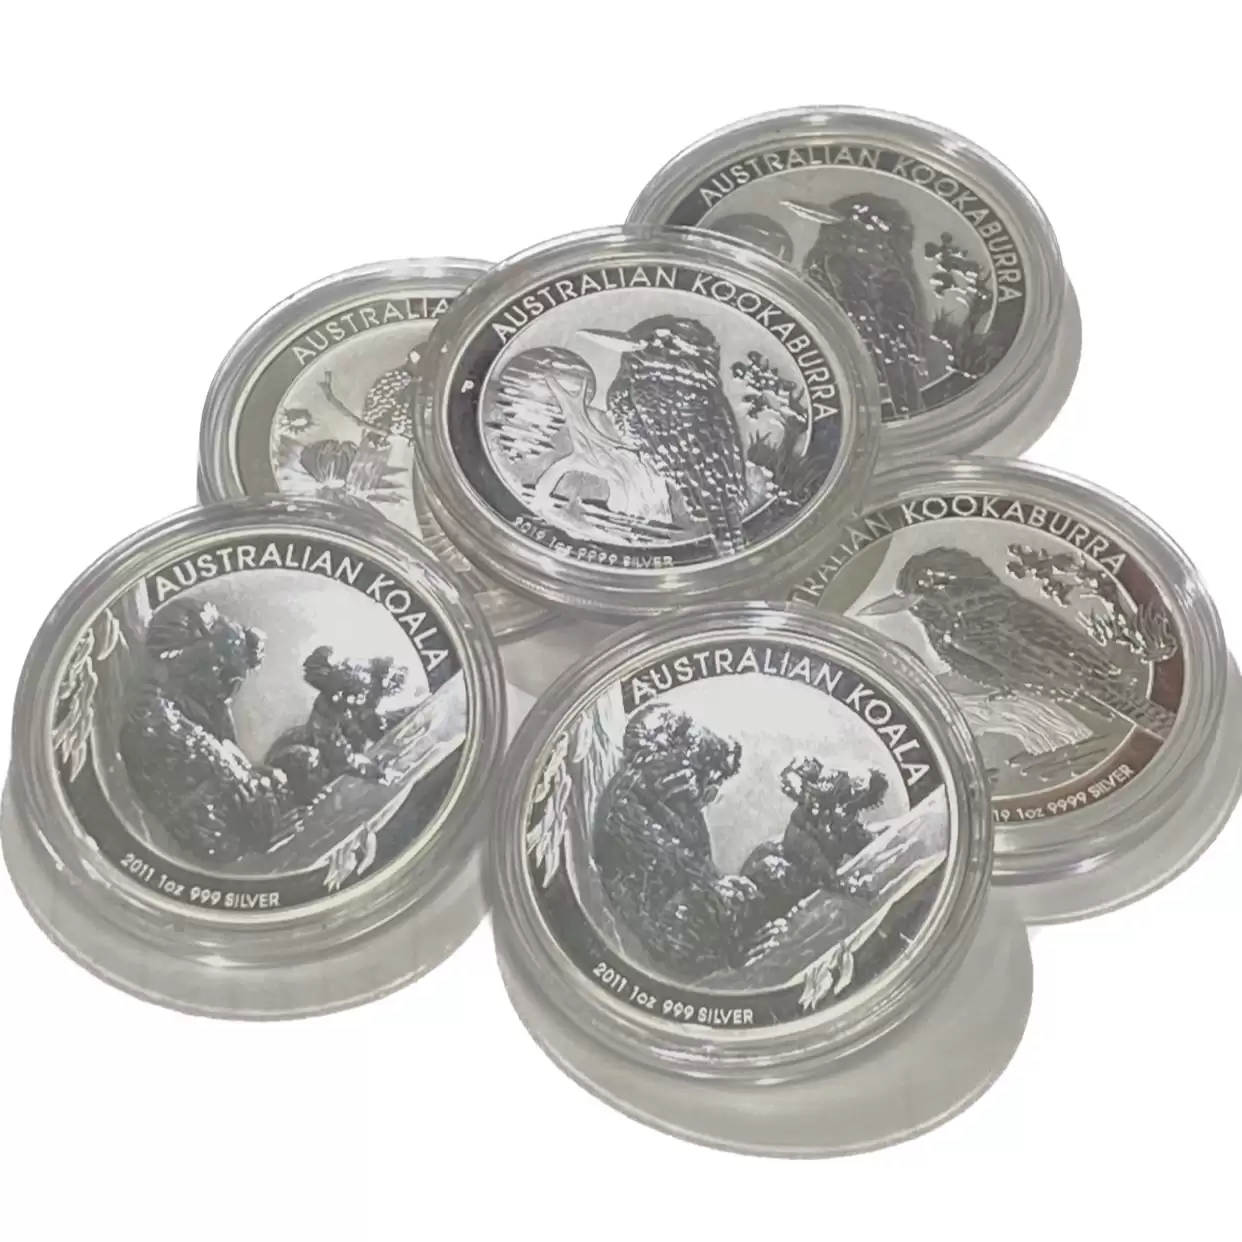 Random 1oz Perth Mint Silver coins in Capsule